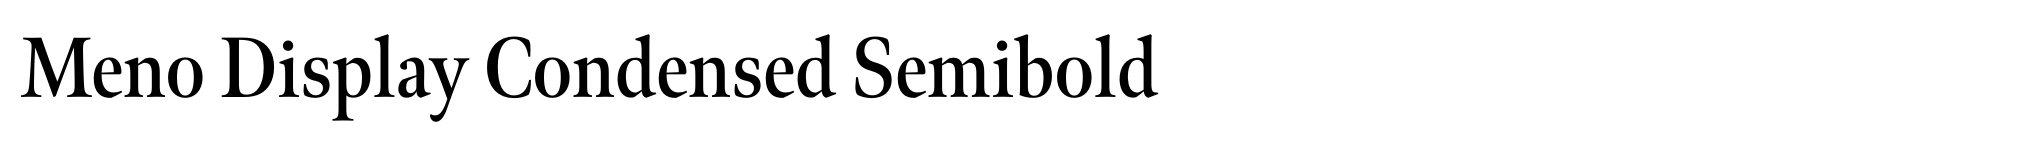 Meno Display Condensed Semibold image